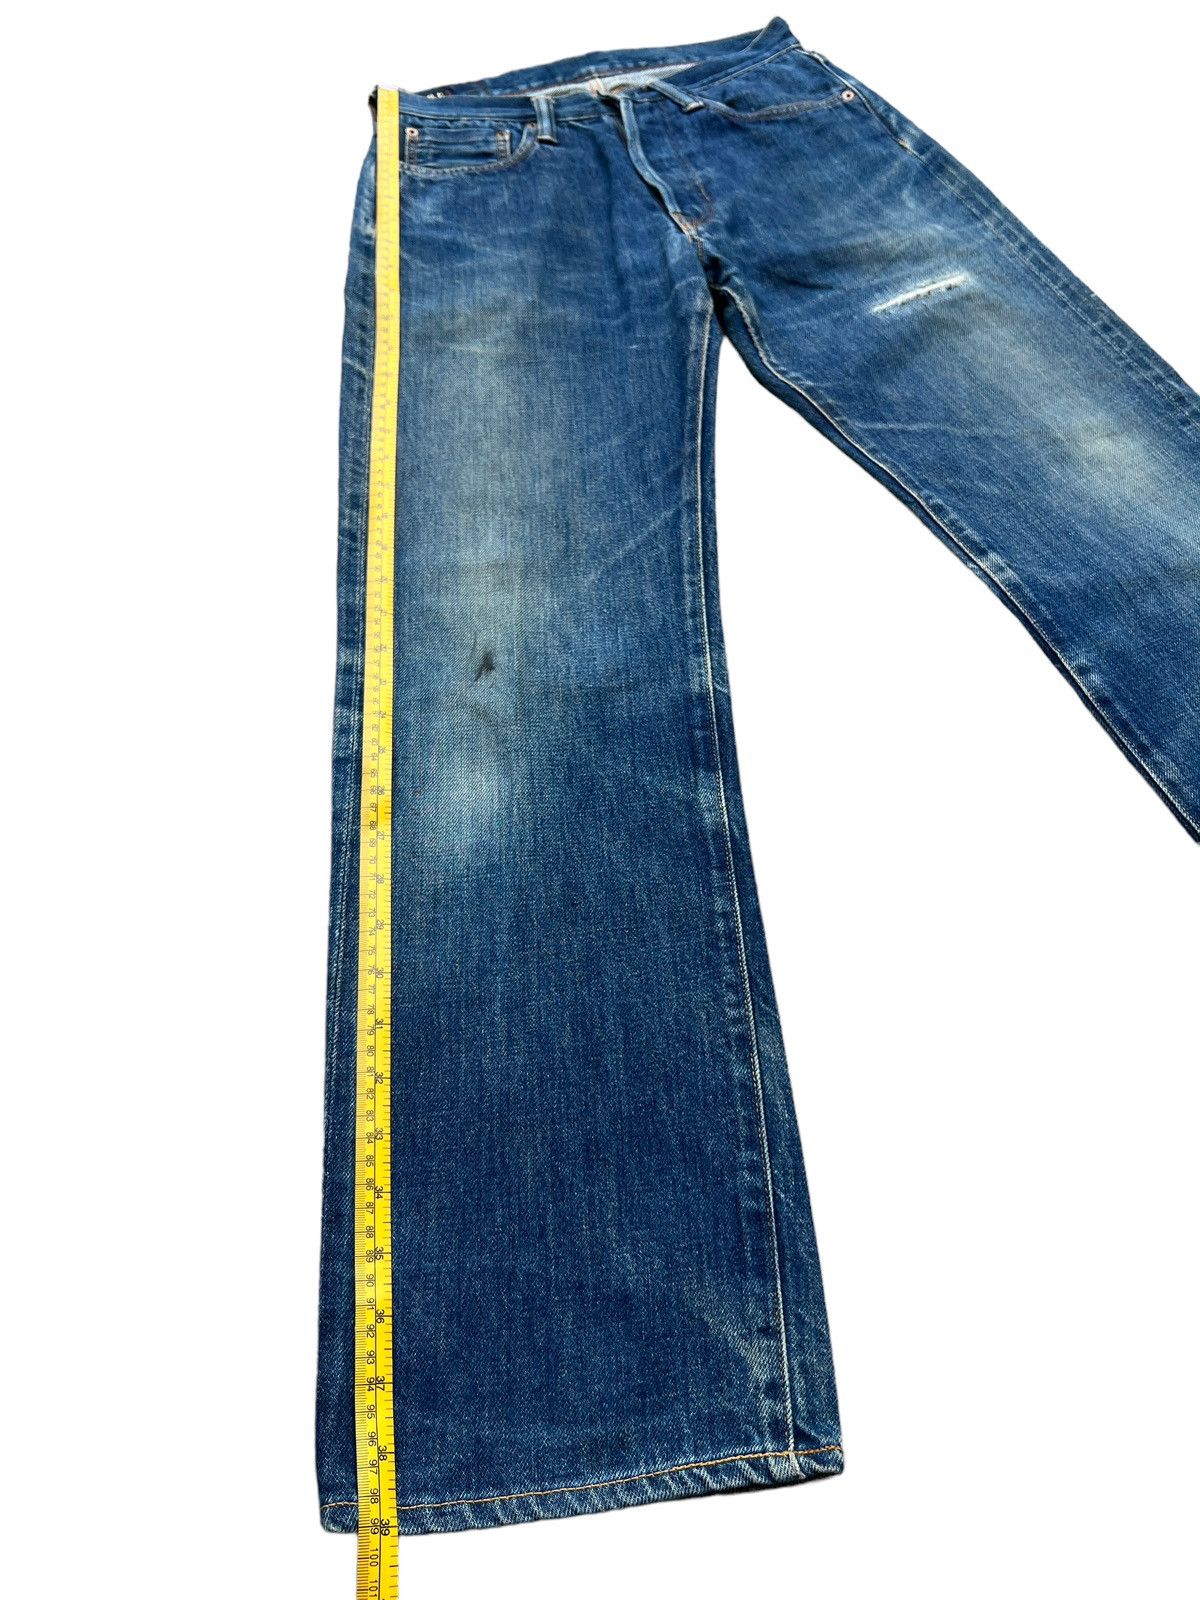 Vintage 45Rpm Selvedge Faded Distressed Denim Jeans 29x29 - 17